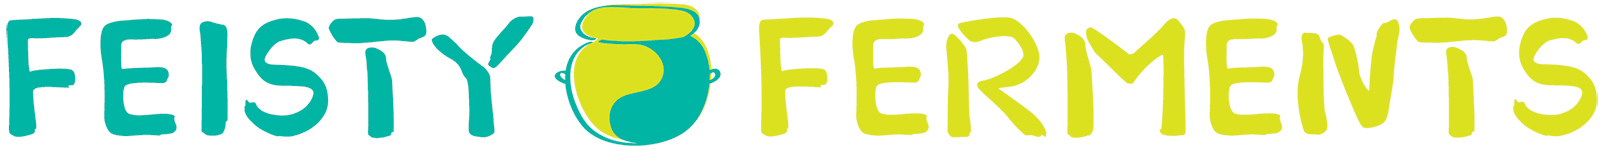 Feisty Ferments LLC green yellow logo